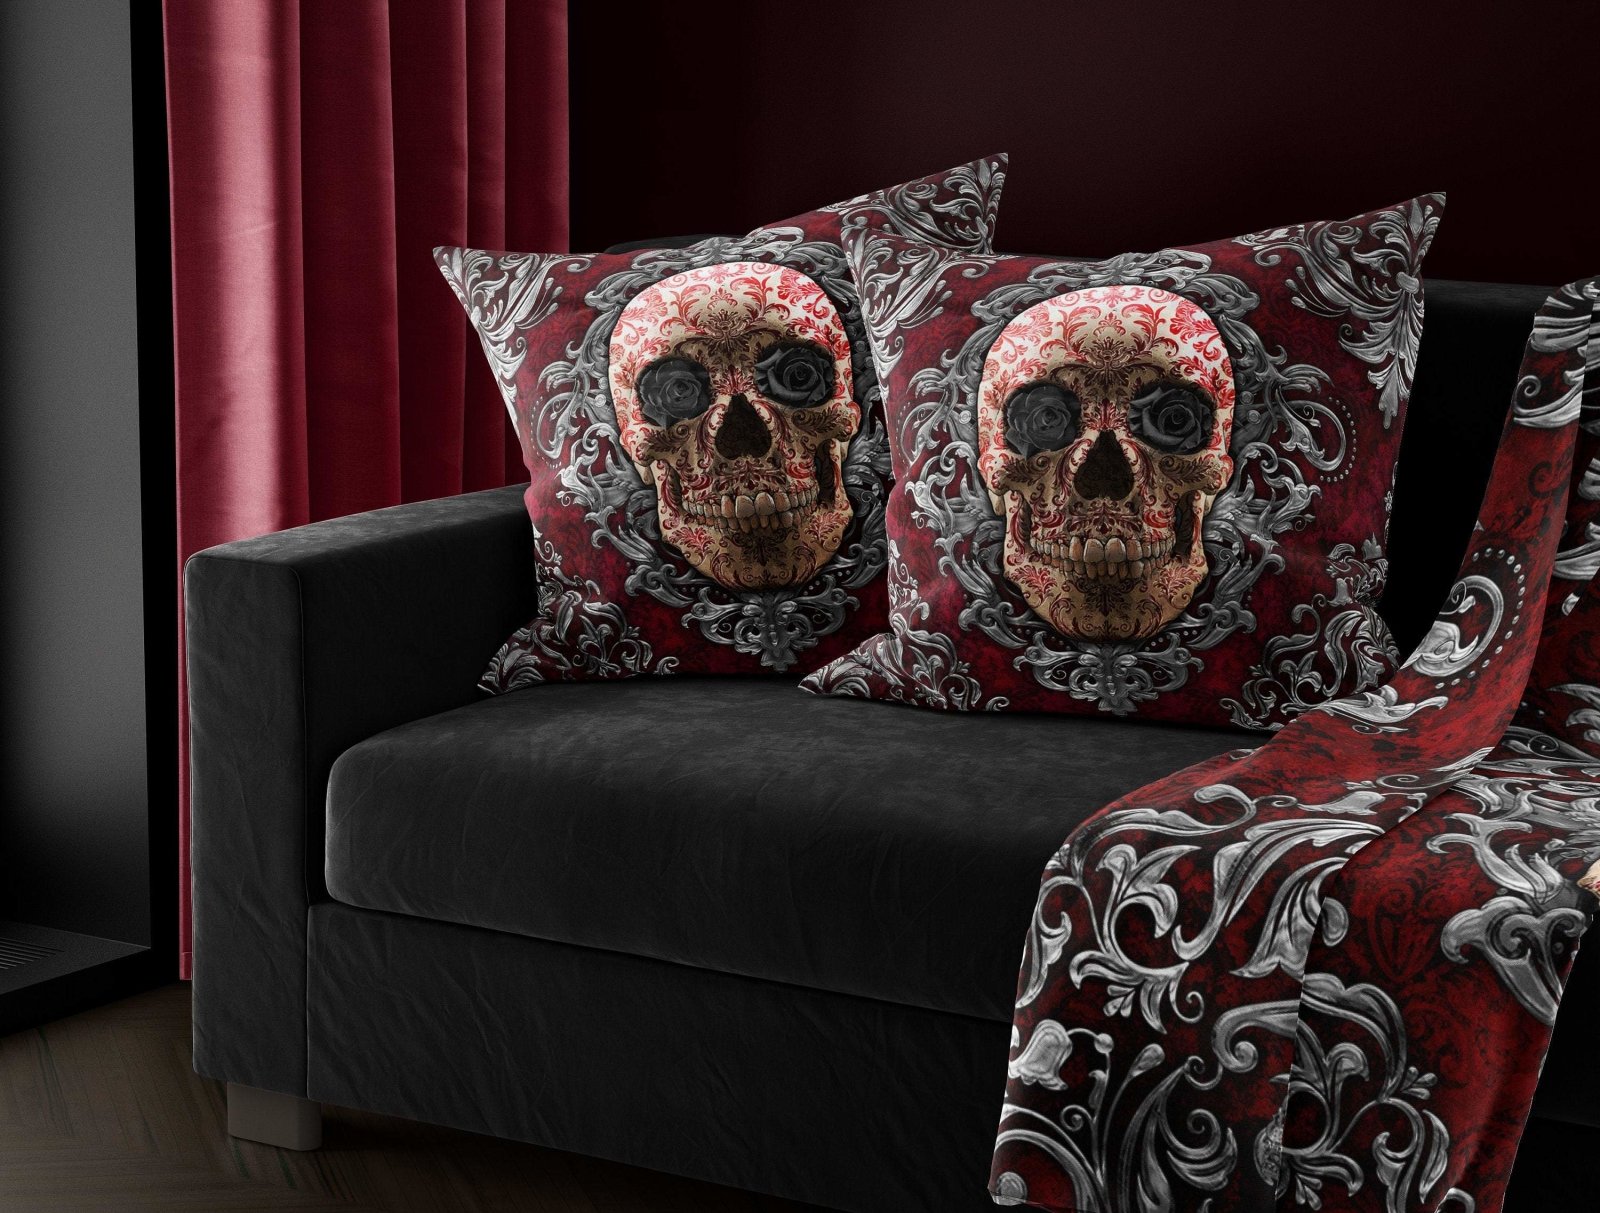 Gothic Skull Throw Pillow, Decorative Accent Cushion, Goth Decor, Macabre Art, Alternative Home - Black Roses - Abysm Internal